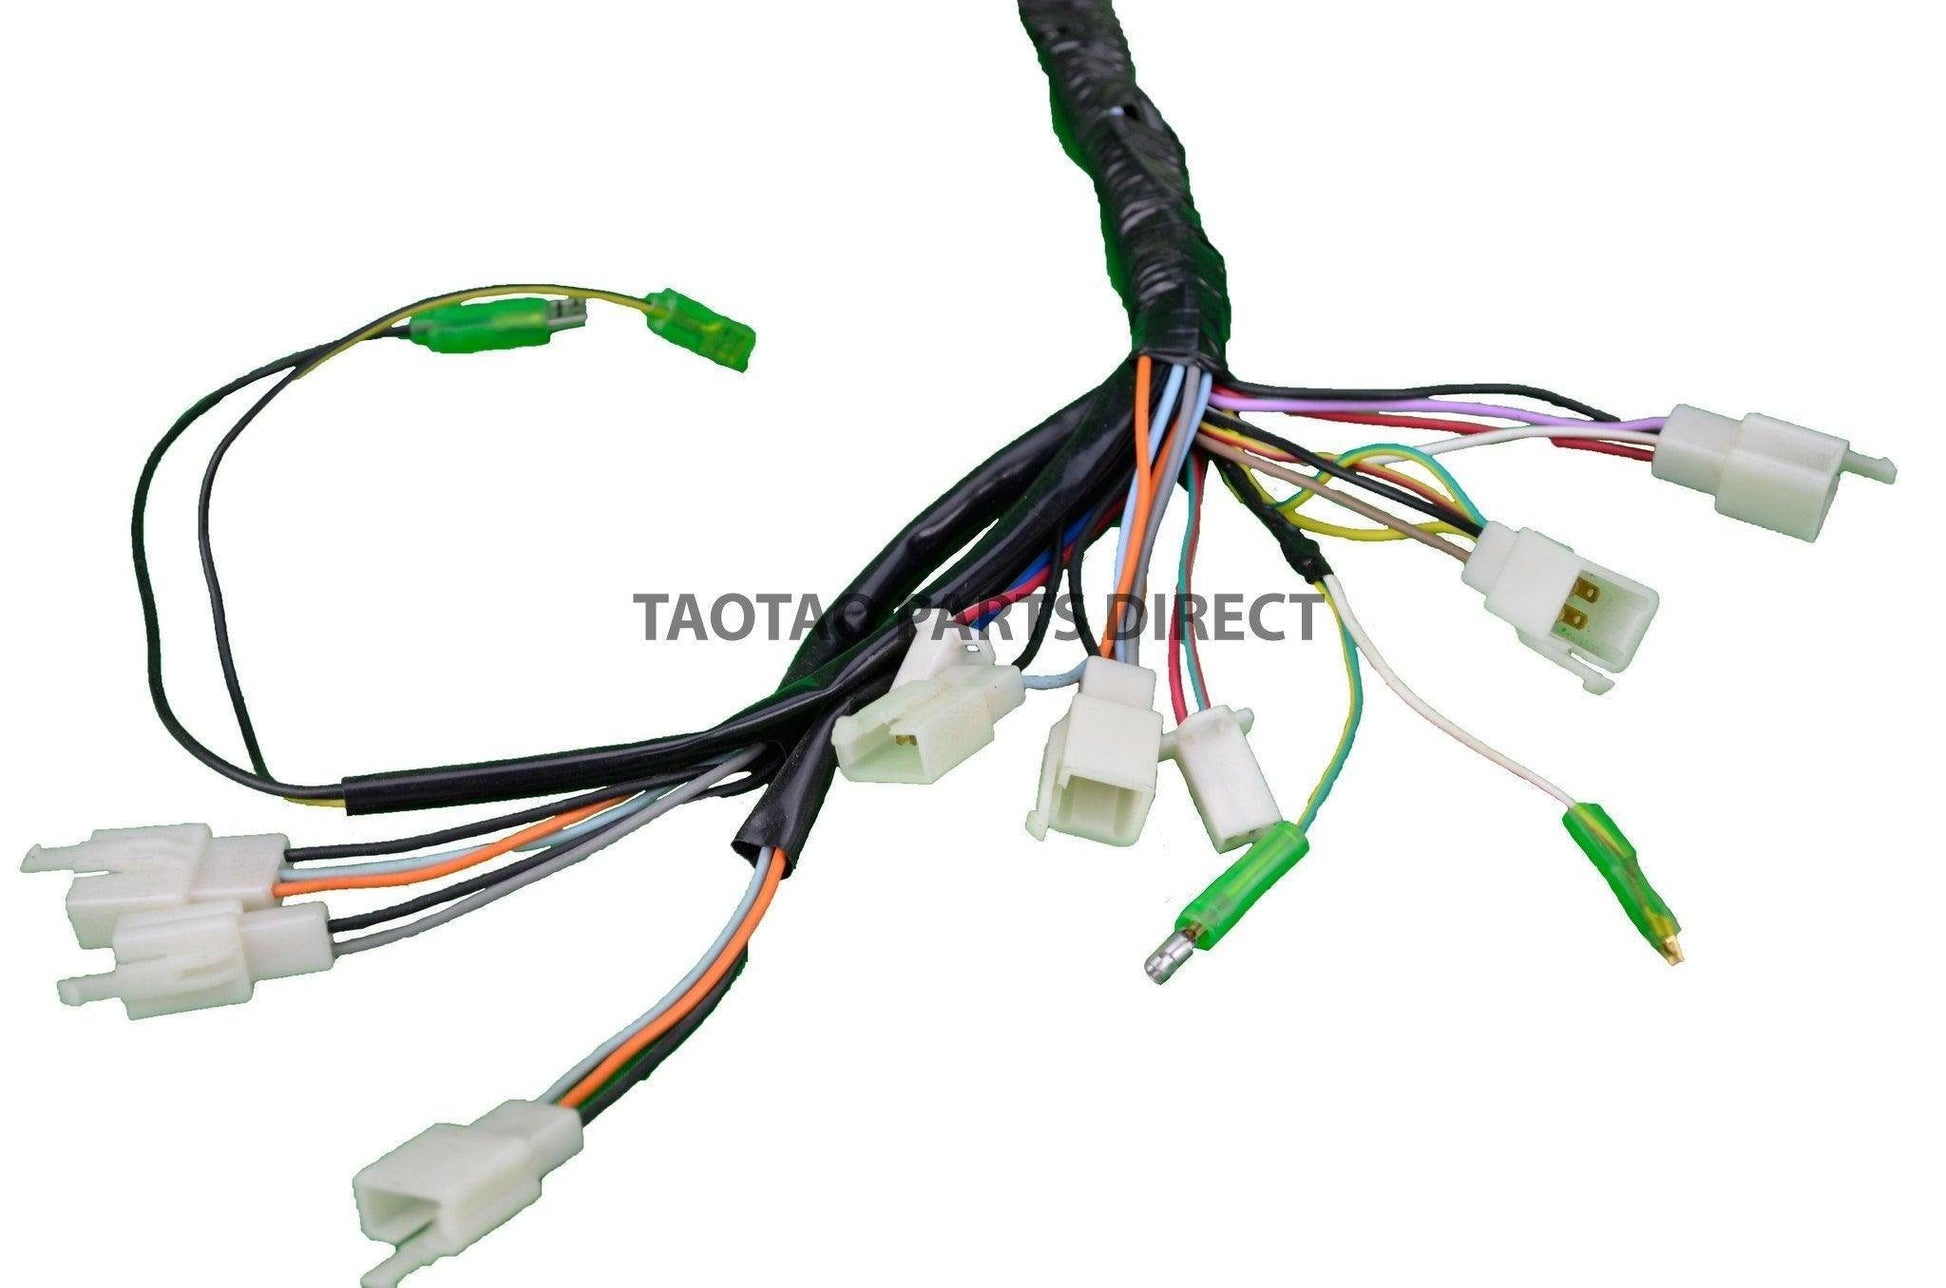 ATA110D Wire Harness #15 - TaoTao Parts Direct